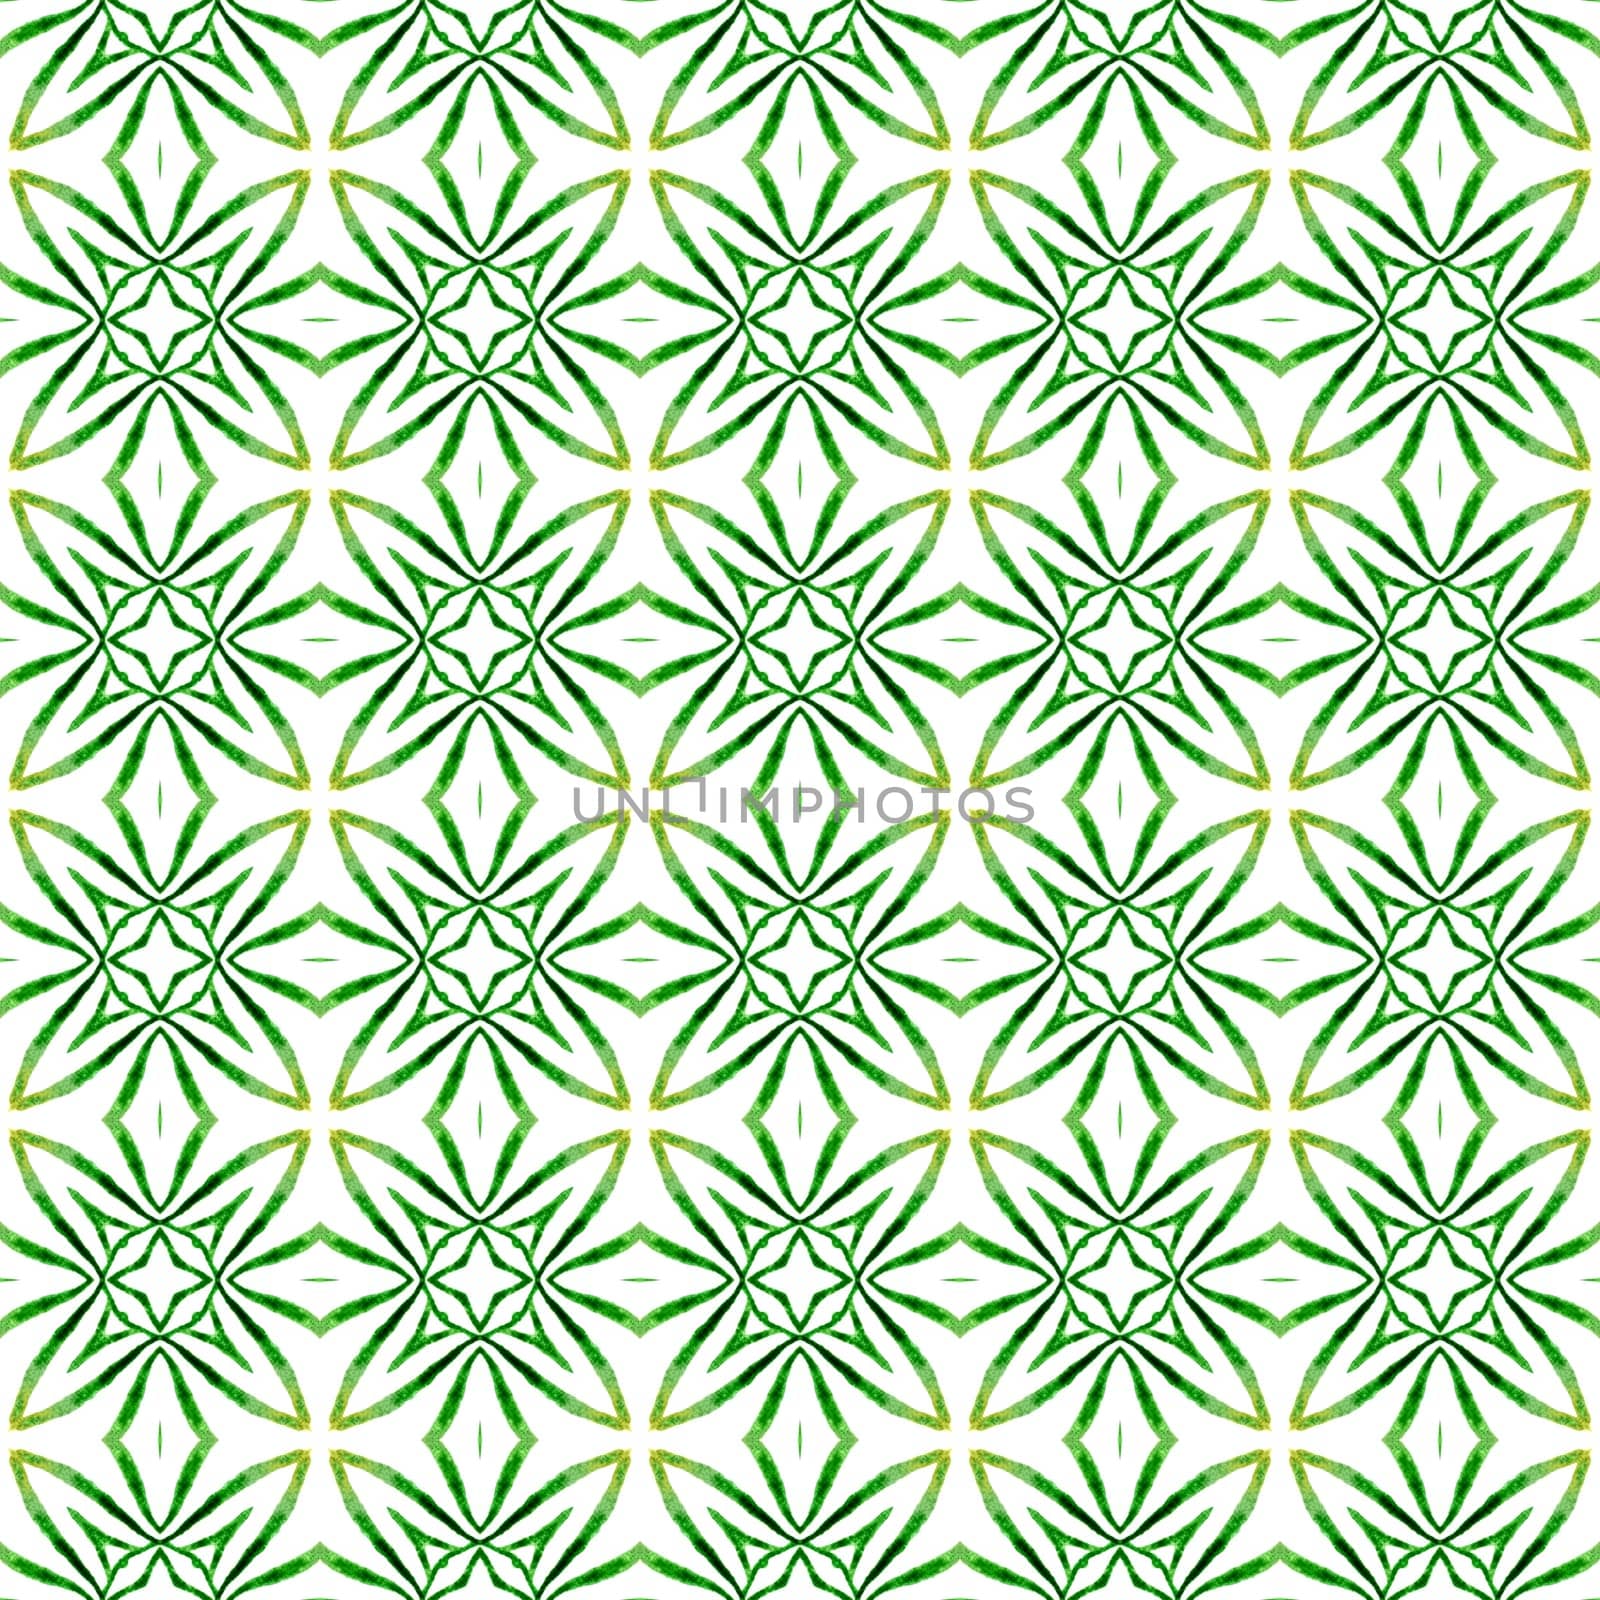 Textile ready fantastic print, swimwear fabric, wallpaper, wrapping. Green awesome boho chic summer design. Hand drawn green mosaic seamless border. Mosaic seamless pattern.